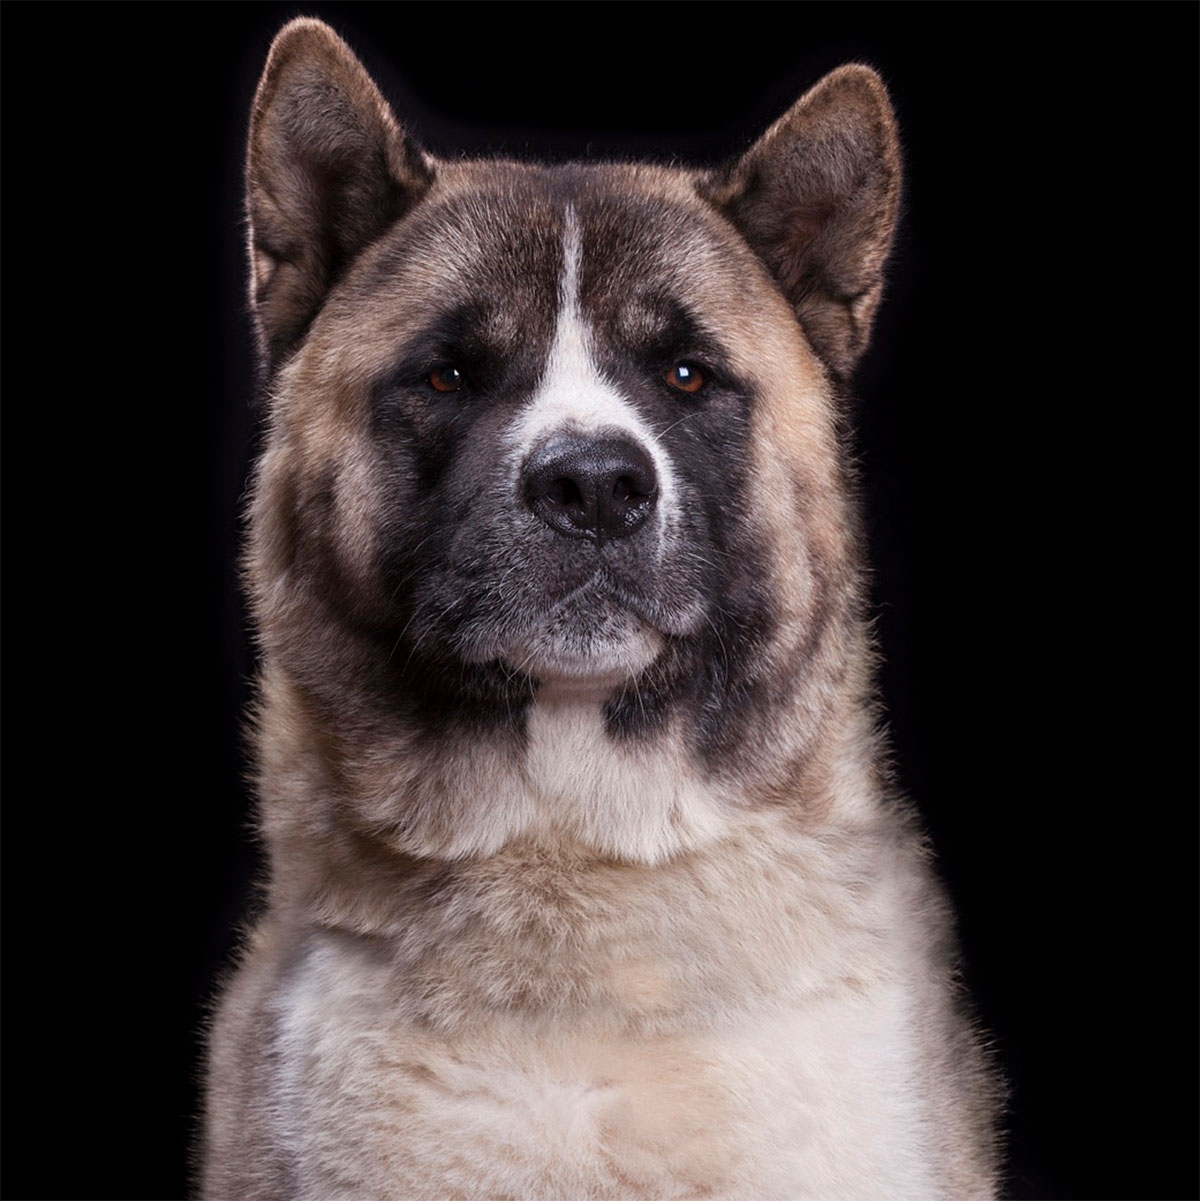 Dog Portrait 3